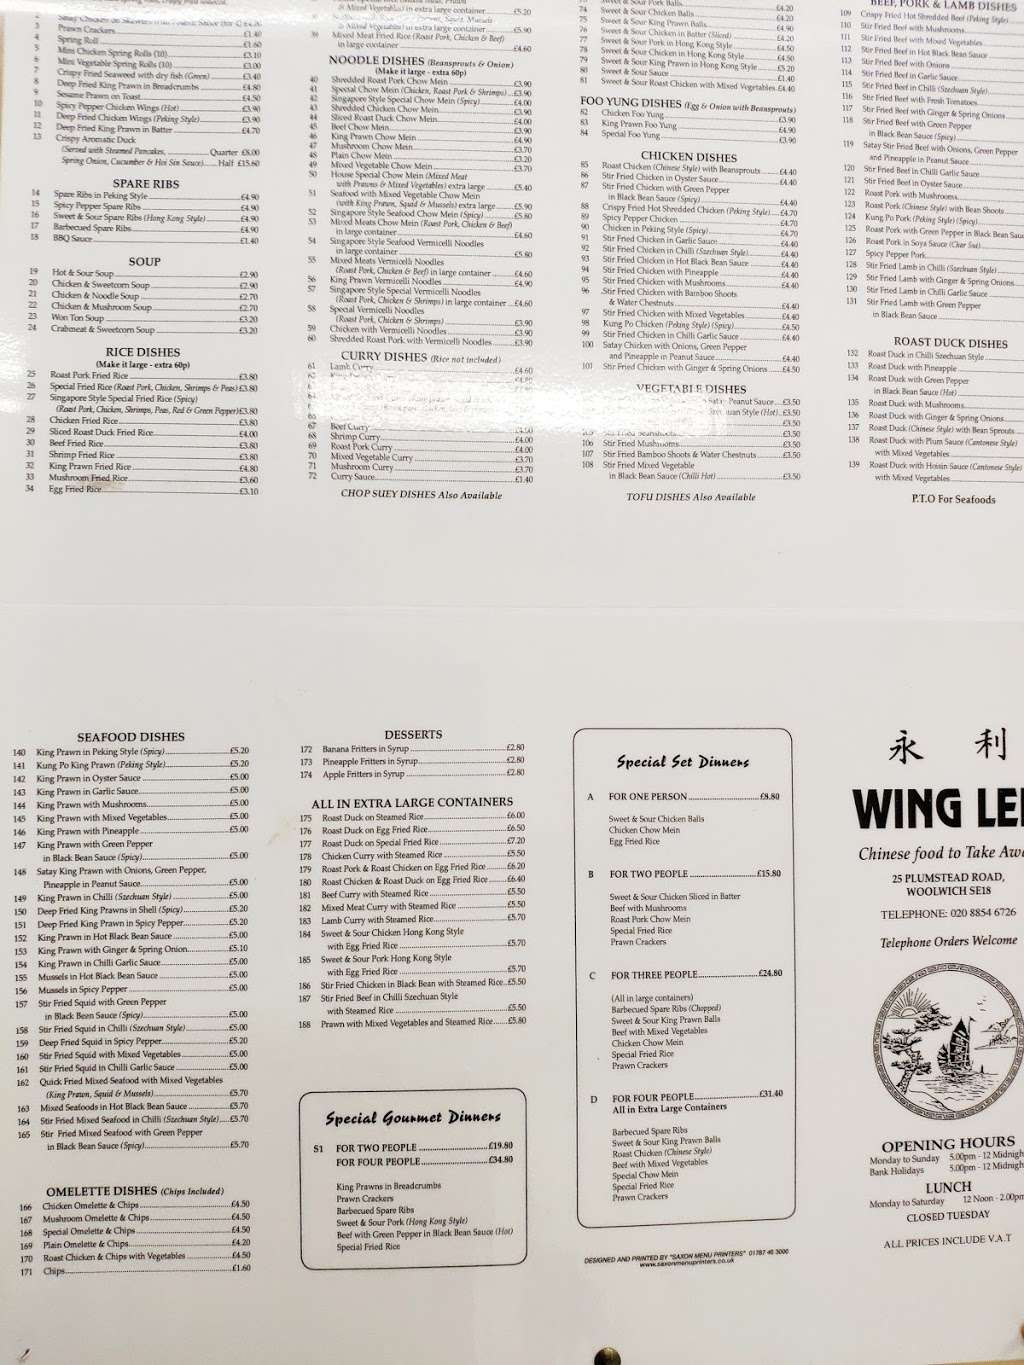 Wing Lee Chinese Takeaway | 25 Plumstead Rd, Woolwich, London SE18 7BZ, UK | Phone: 020 8854 6726